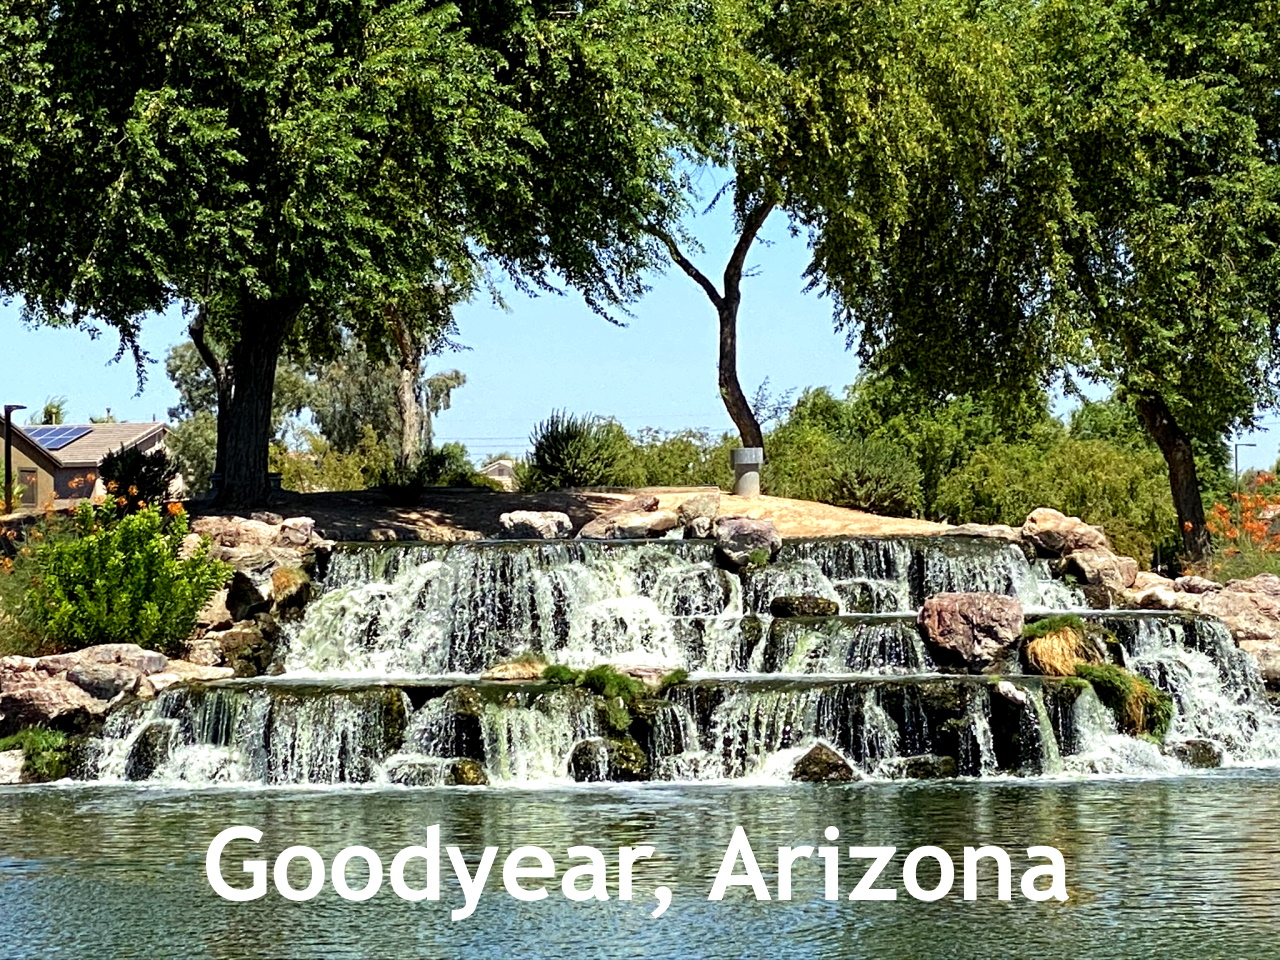 Rio Paseo Park and Waterfall in Goodyear, Arizona